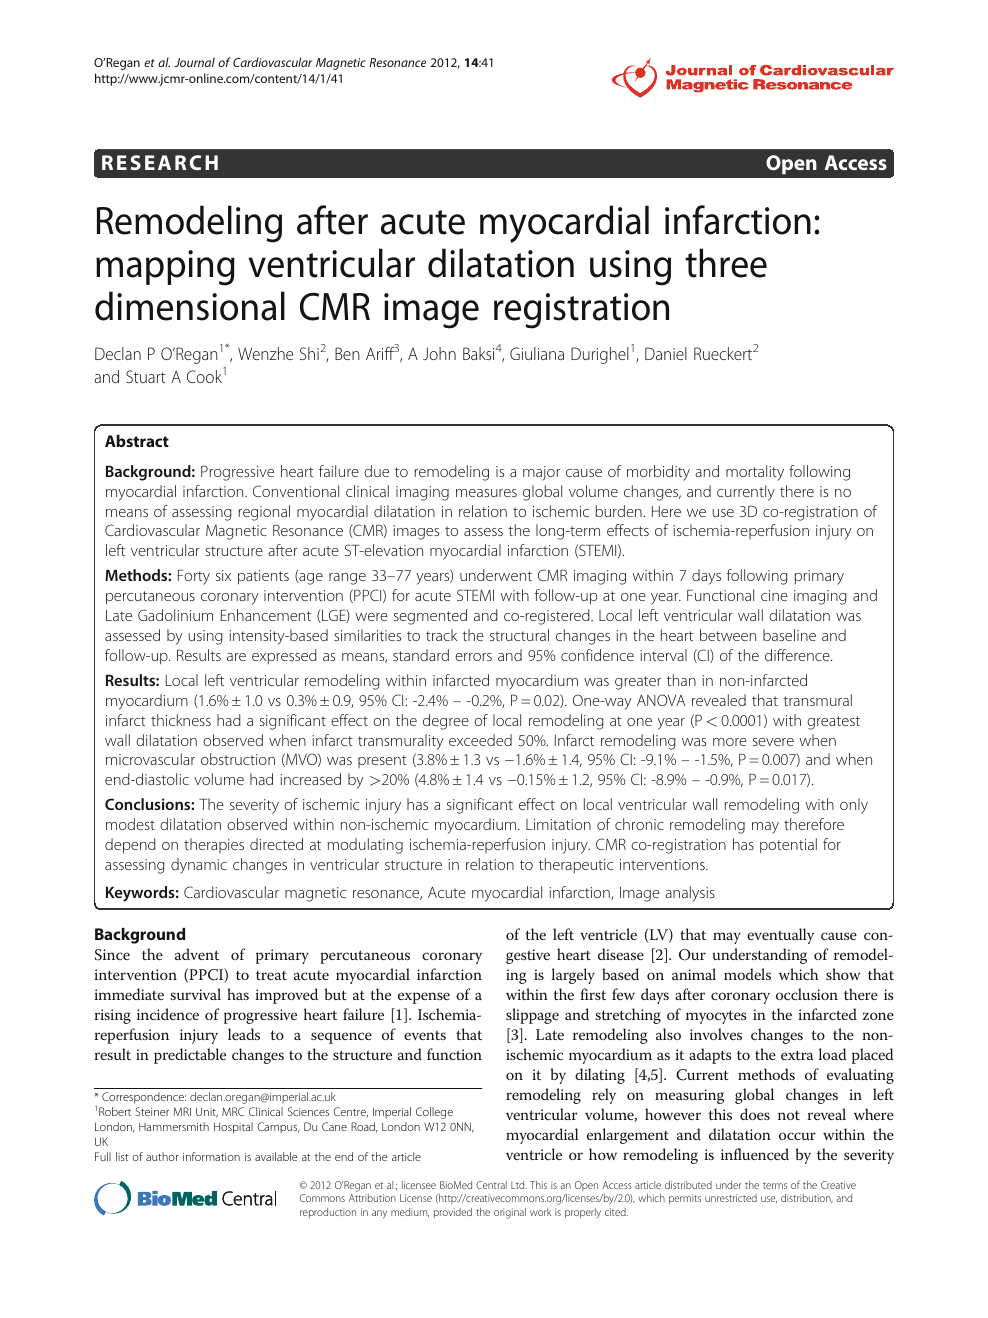 Progressive myocardial injury/left ventricular dysfunction and